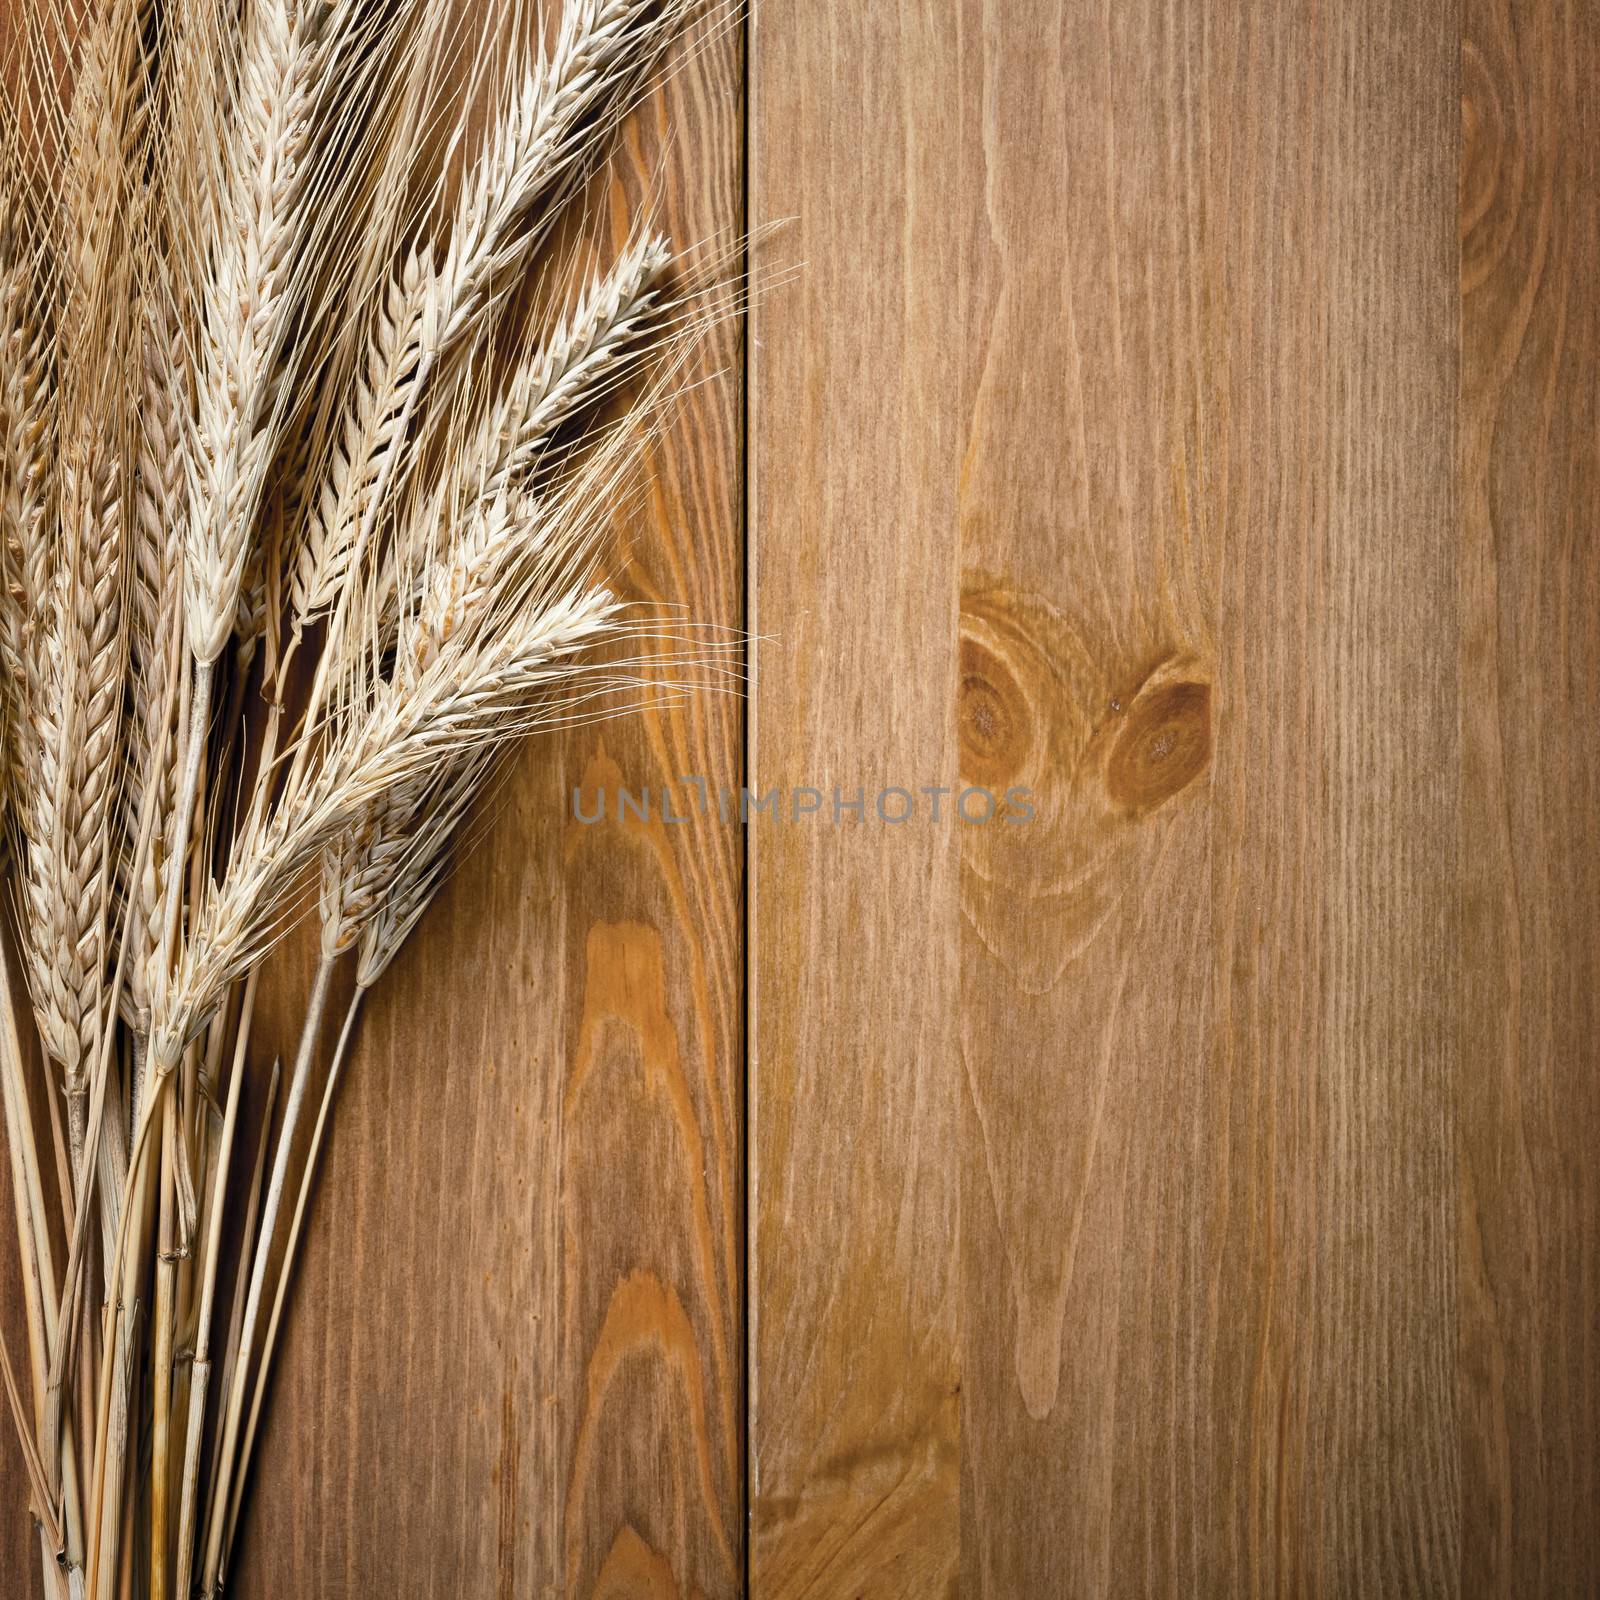 Wheat Ears by bozena_fulawka